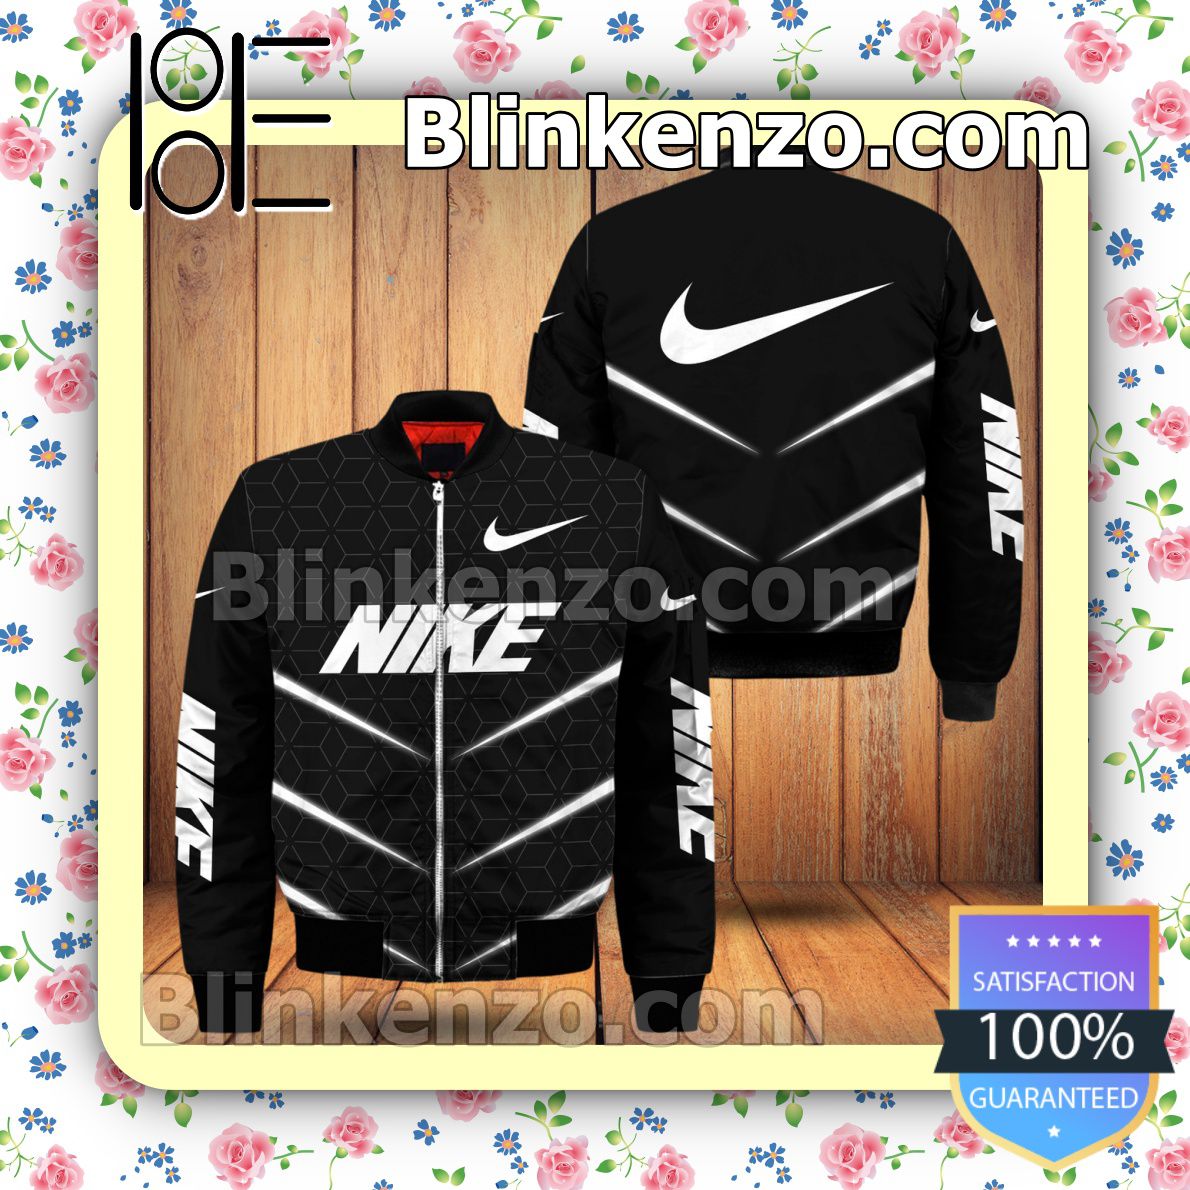 Nike White Brand Name And Logo Metro Rhombus Black Military Jacket Sportwear